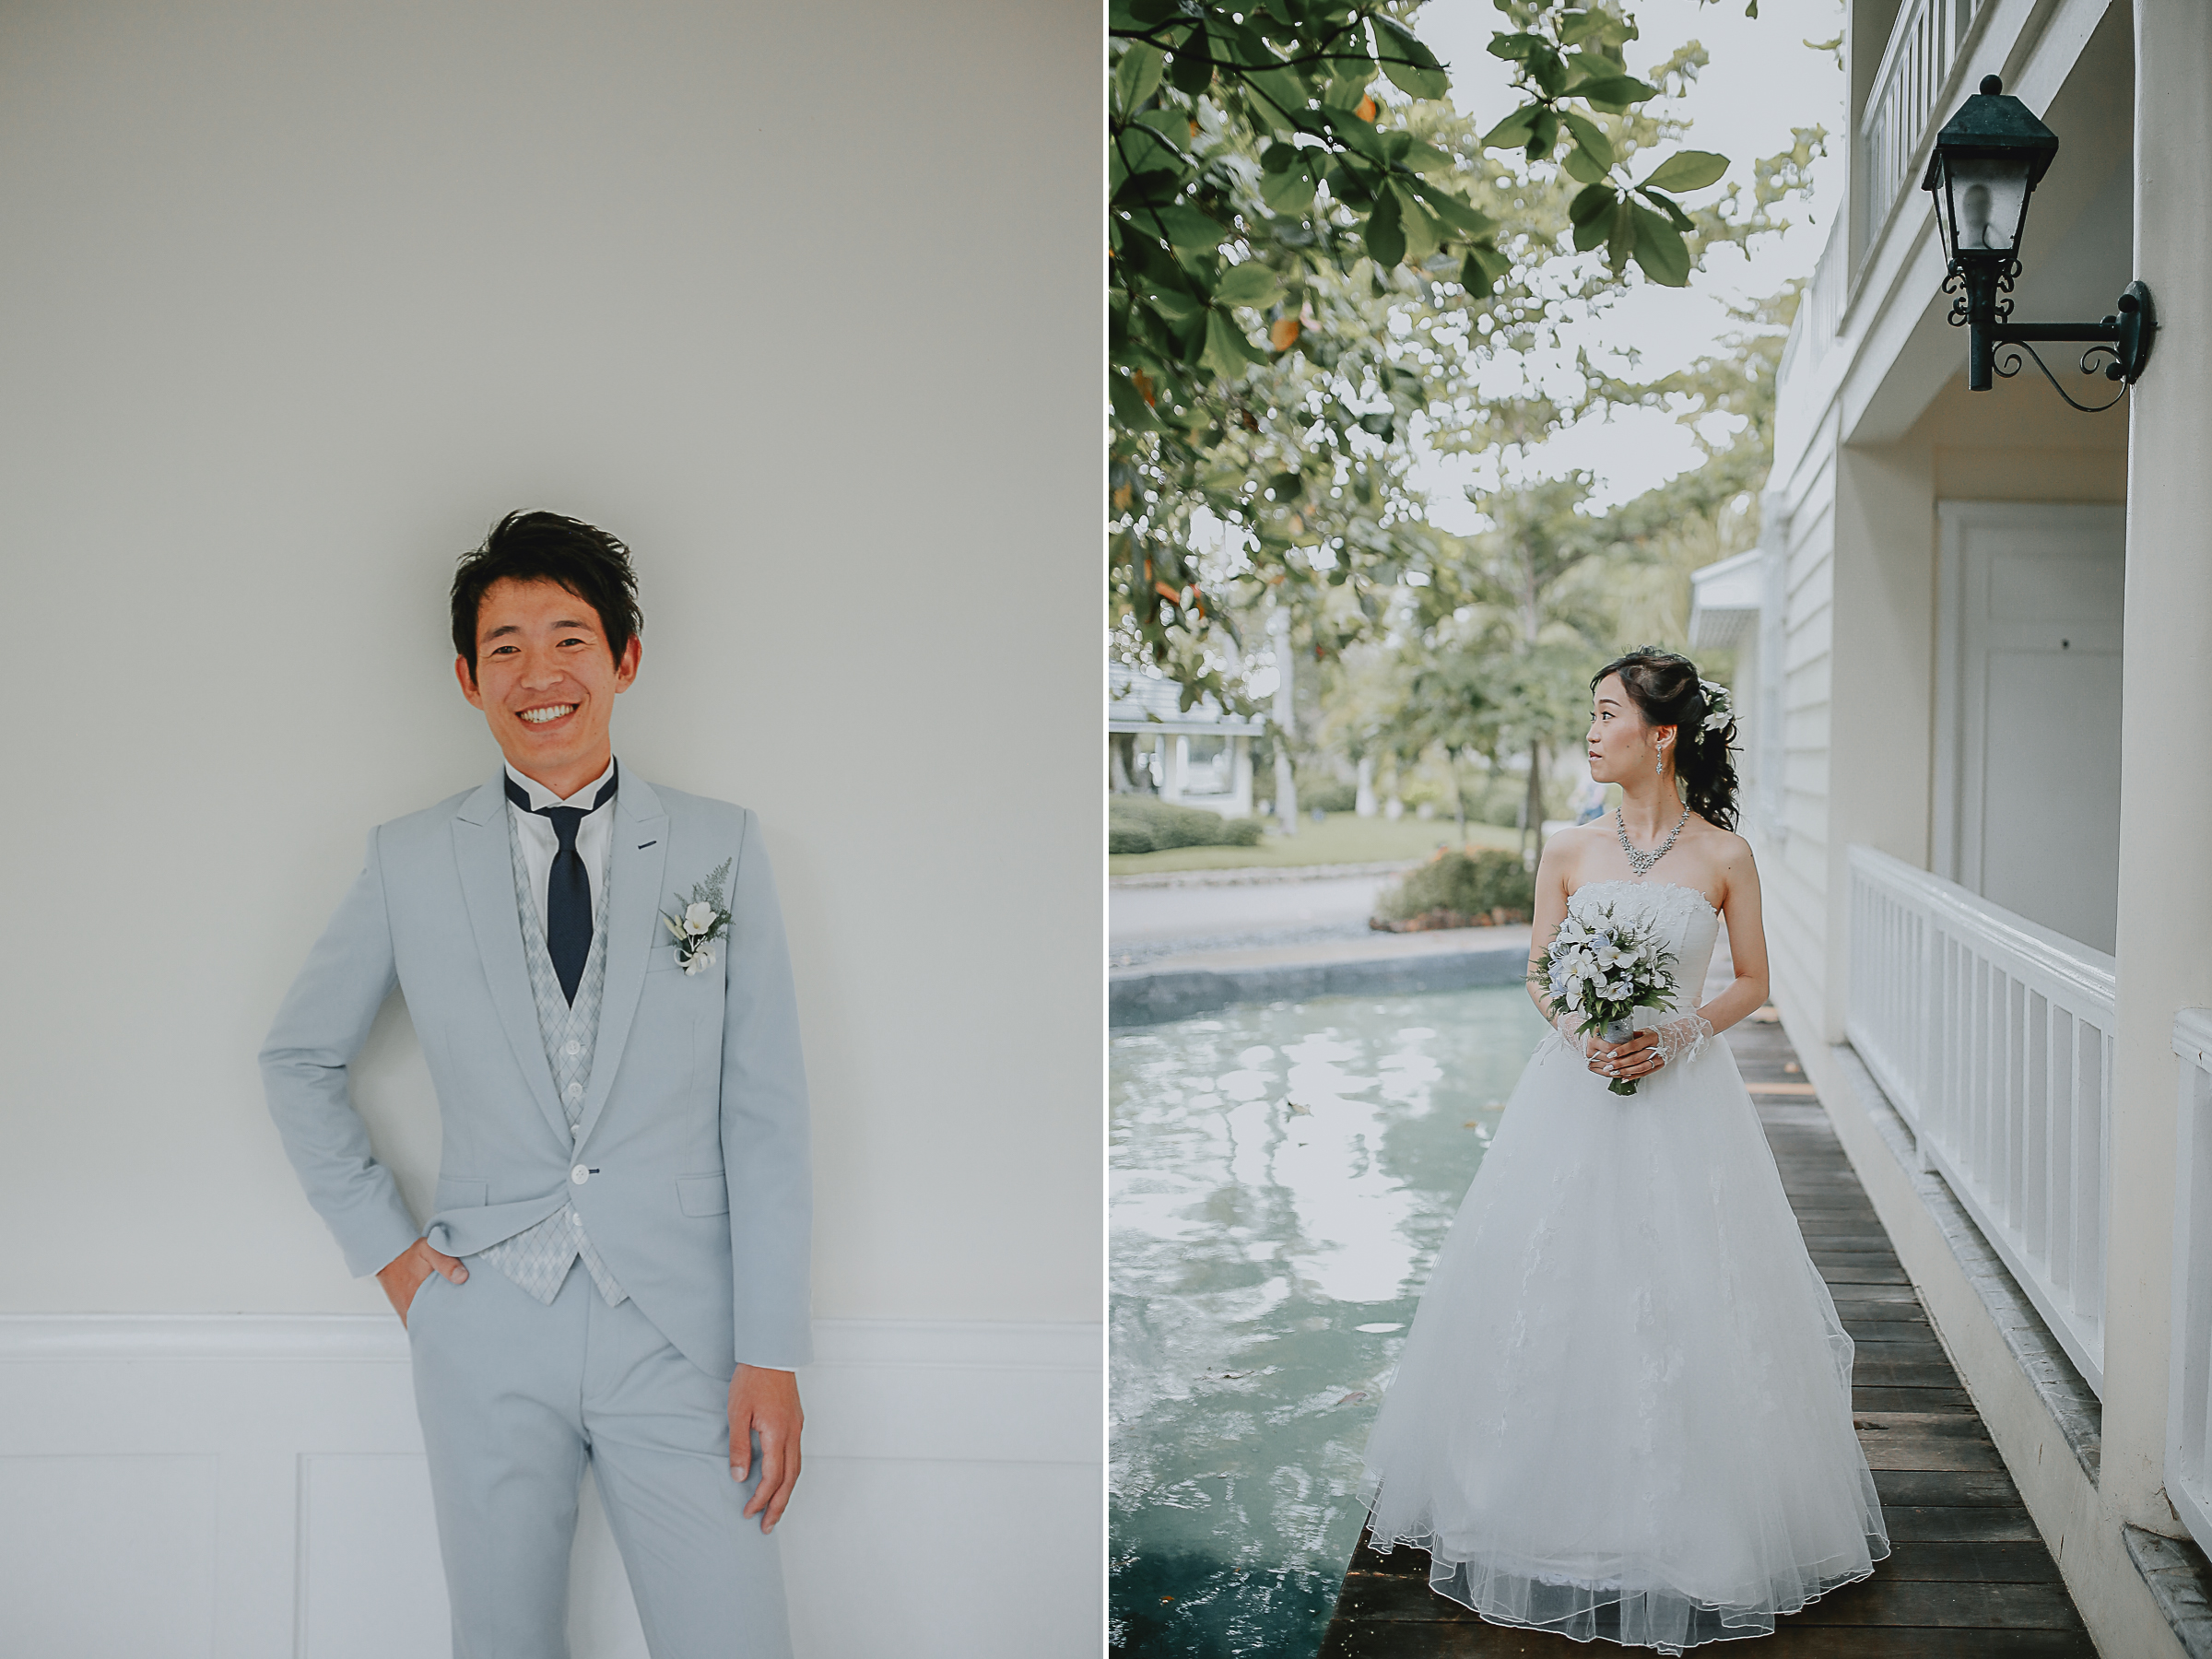 plantation bay intimate wedding yoshi and anna 0001 - Plantation Bay Intimate Wedding - Yoshi & Anna